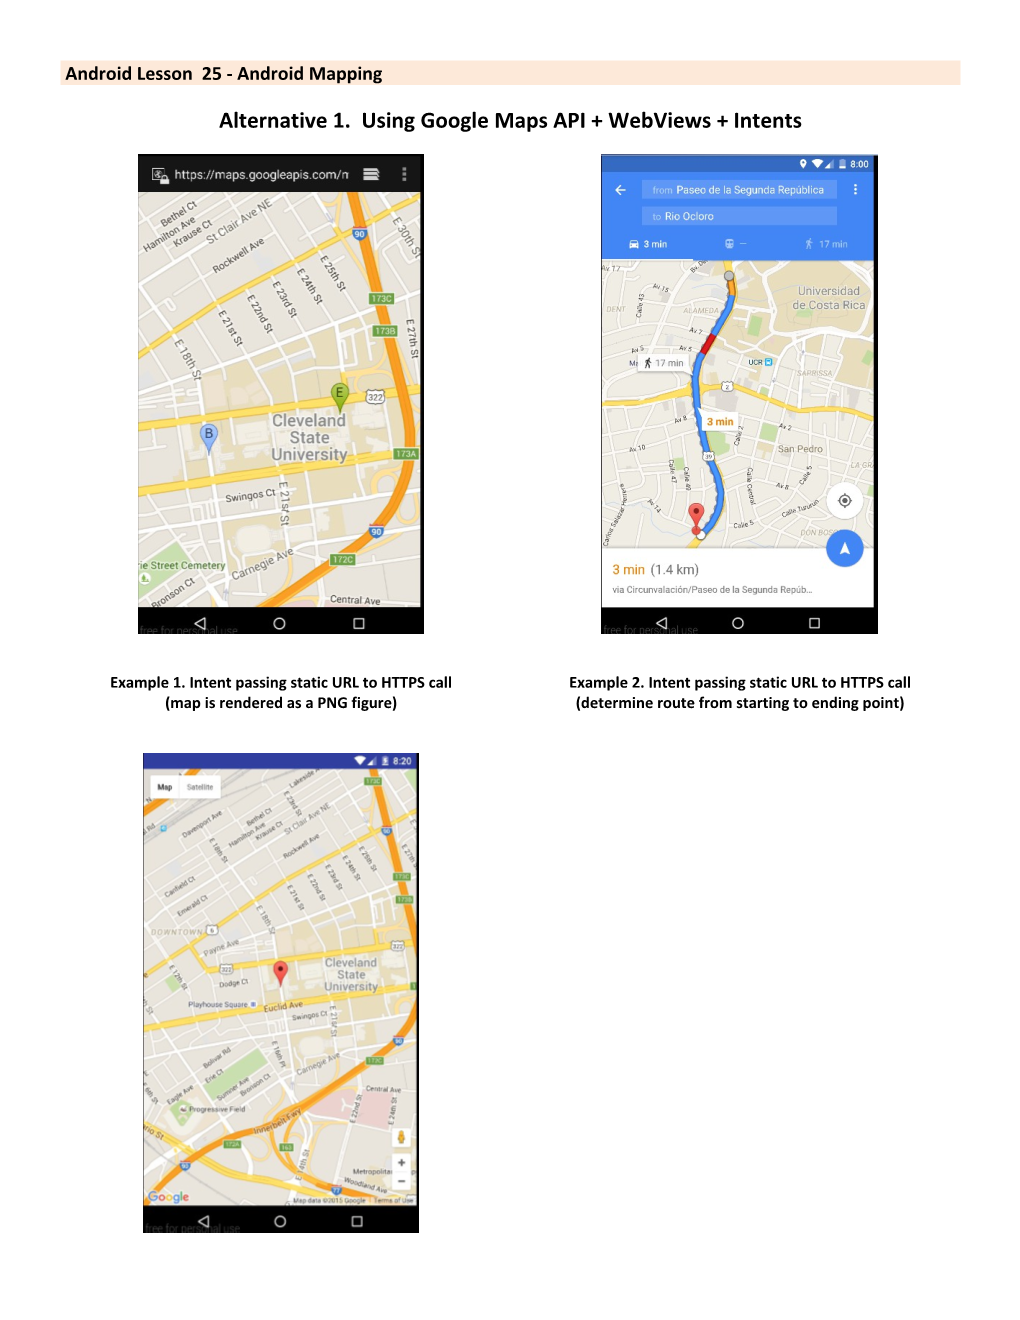 Alternative 1. Using Google Maps API + Webviews + Intents